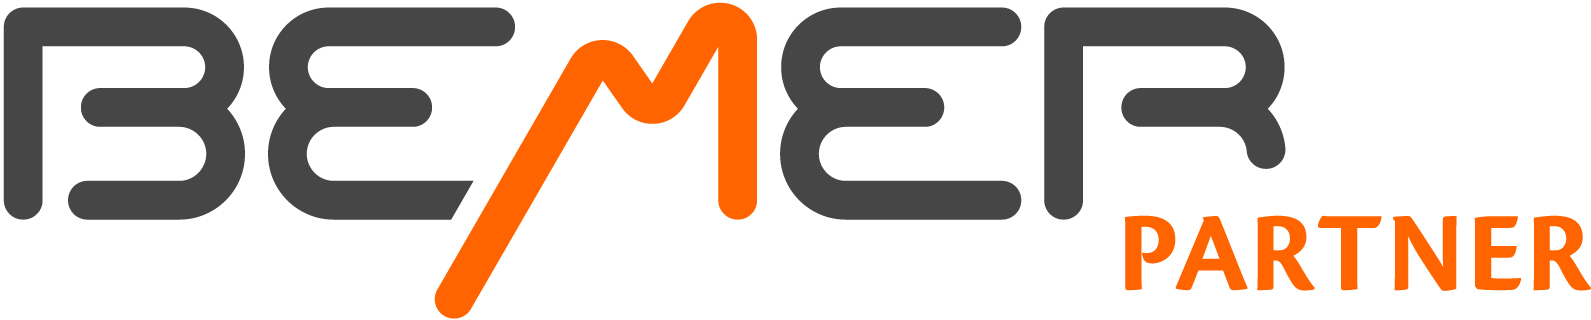 BEMER logo partner